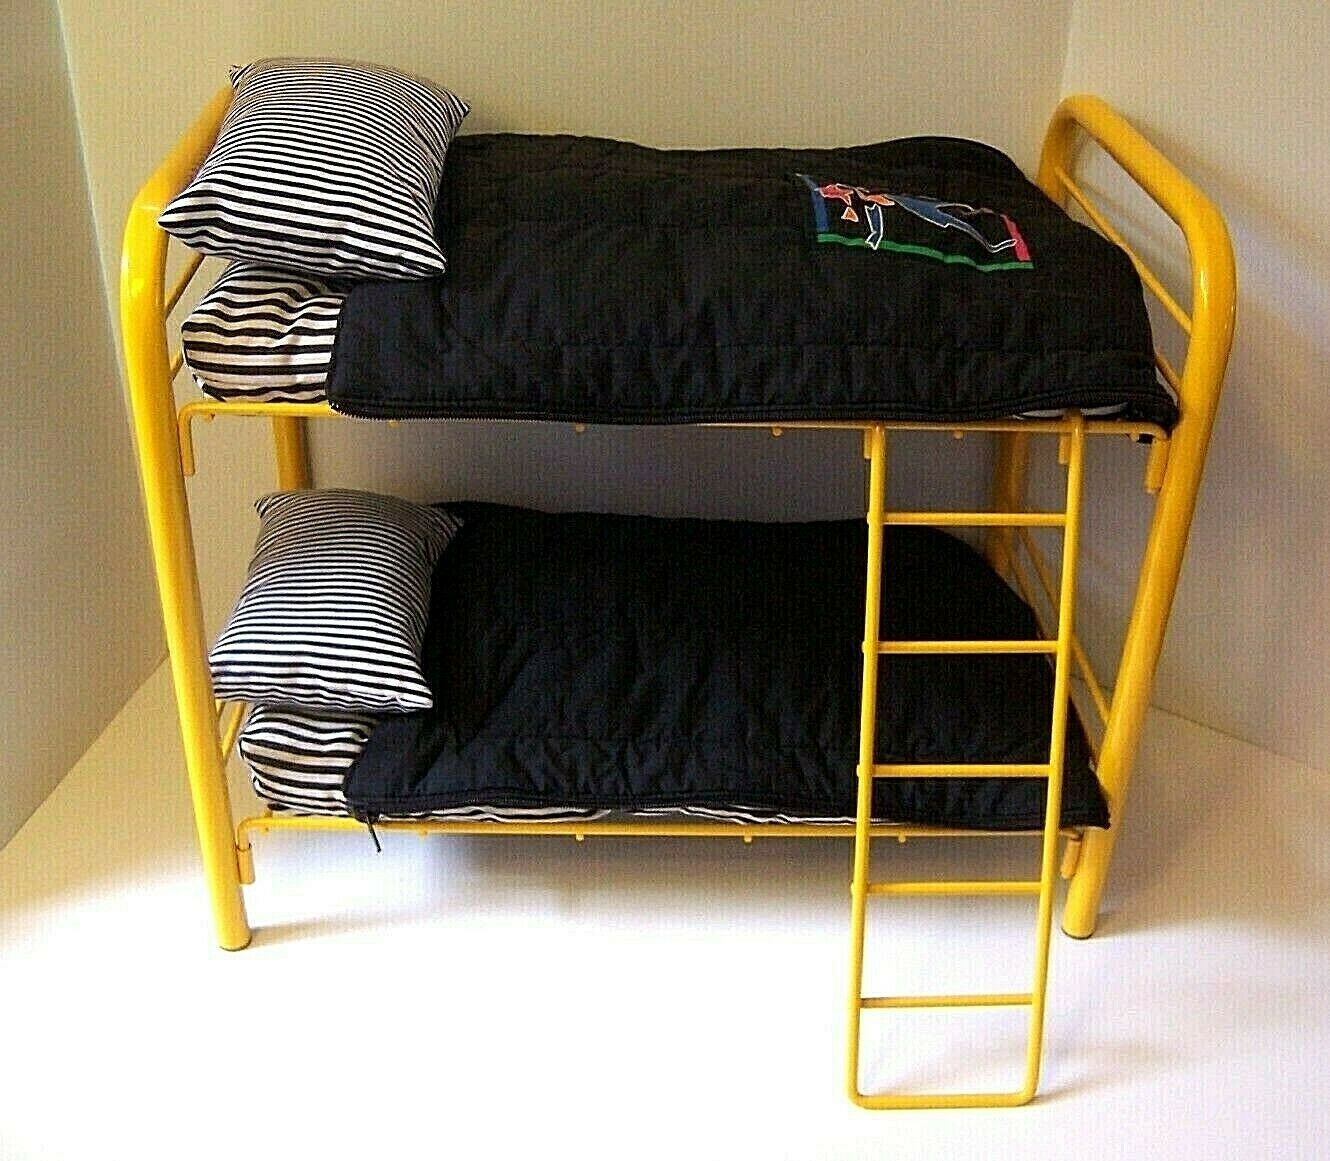 American Girl Yellow Bunk Bed with Bedding & Sleep Sack Pleasant Co